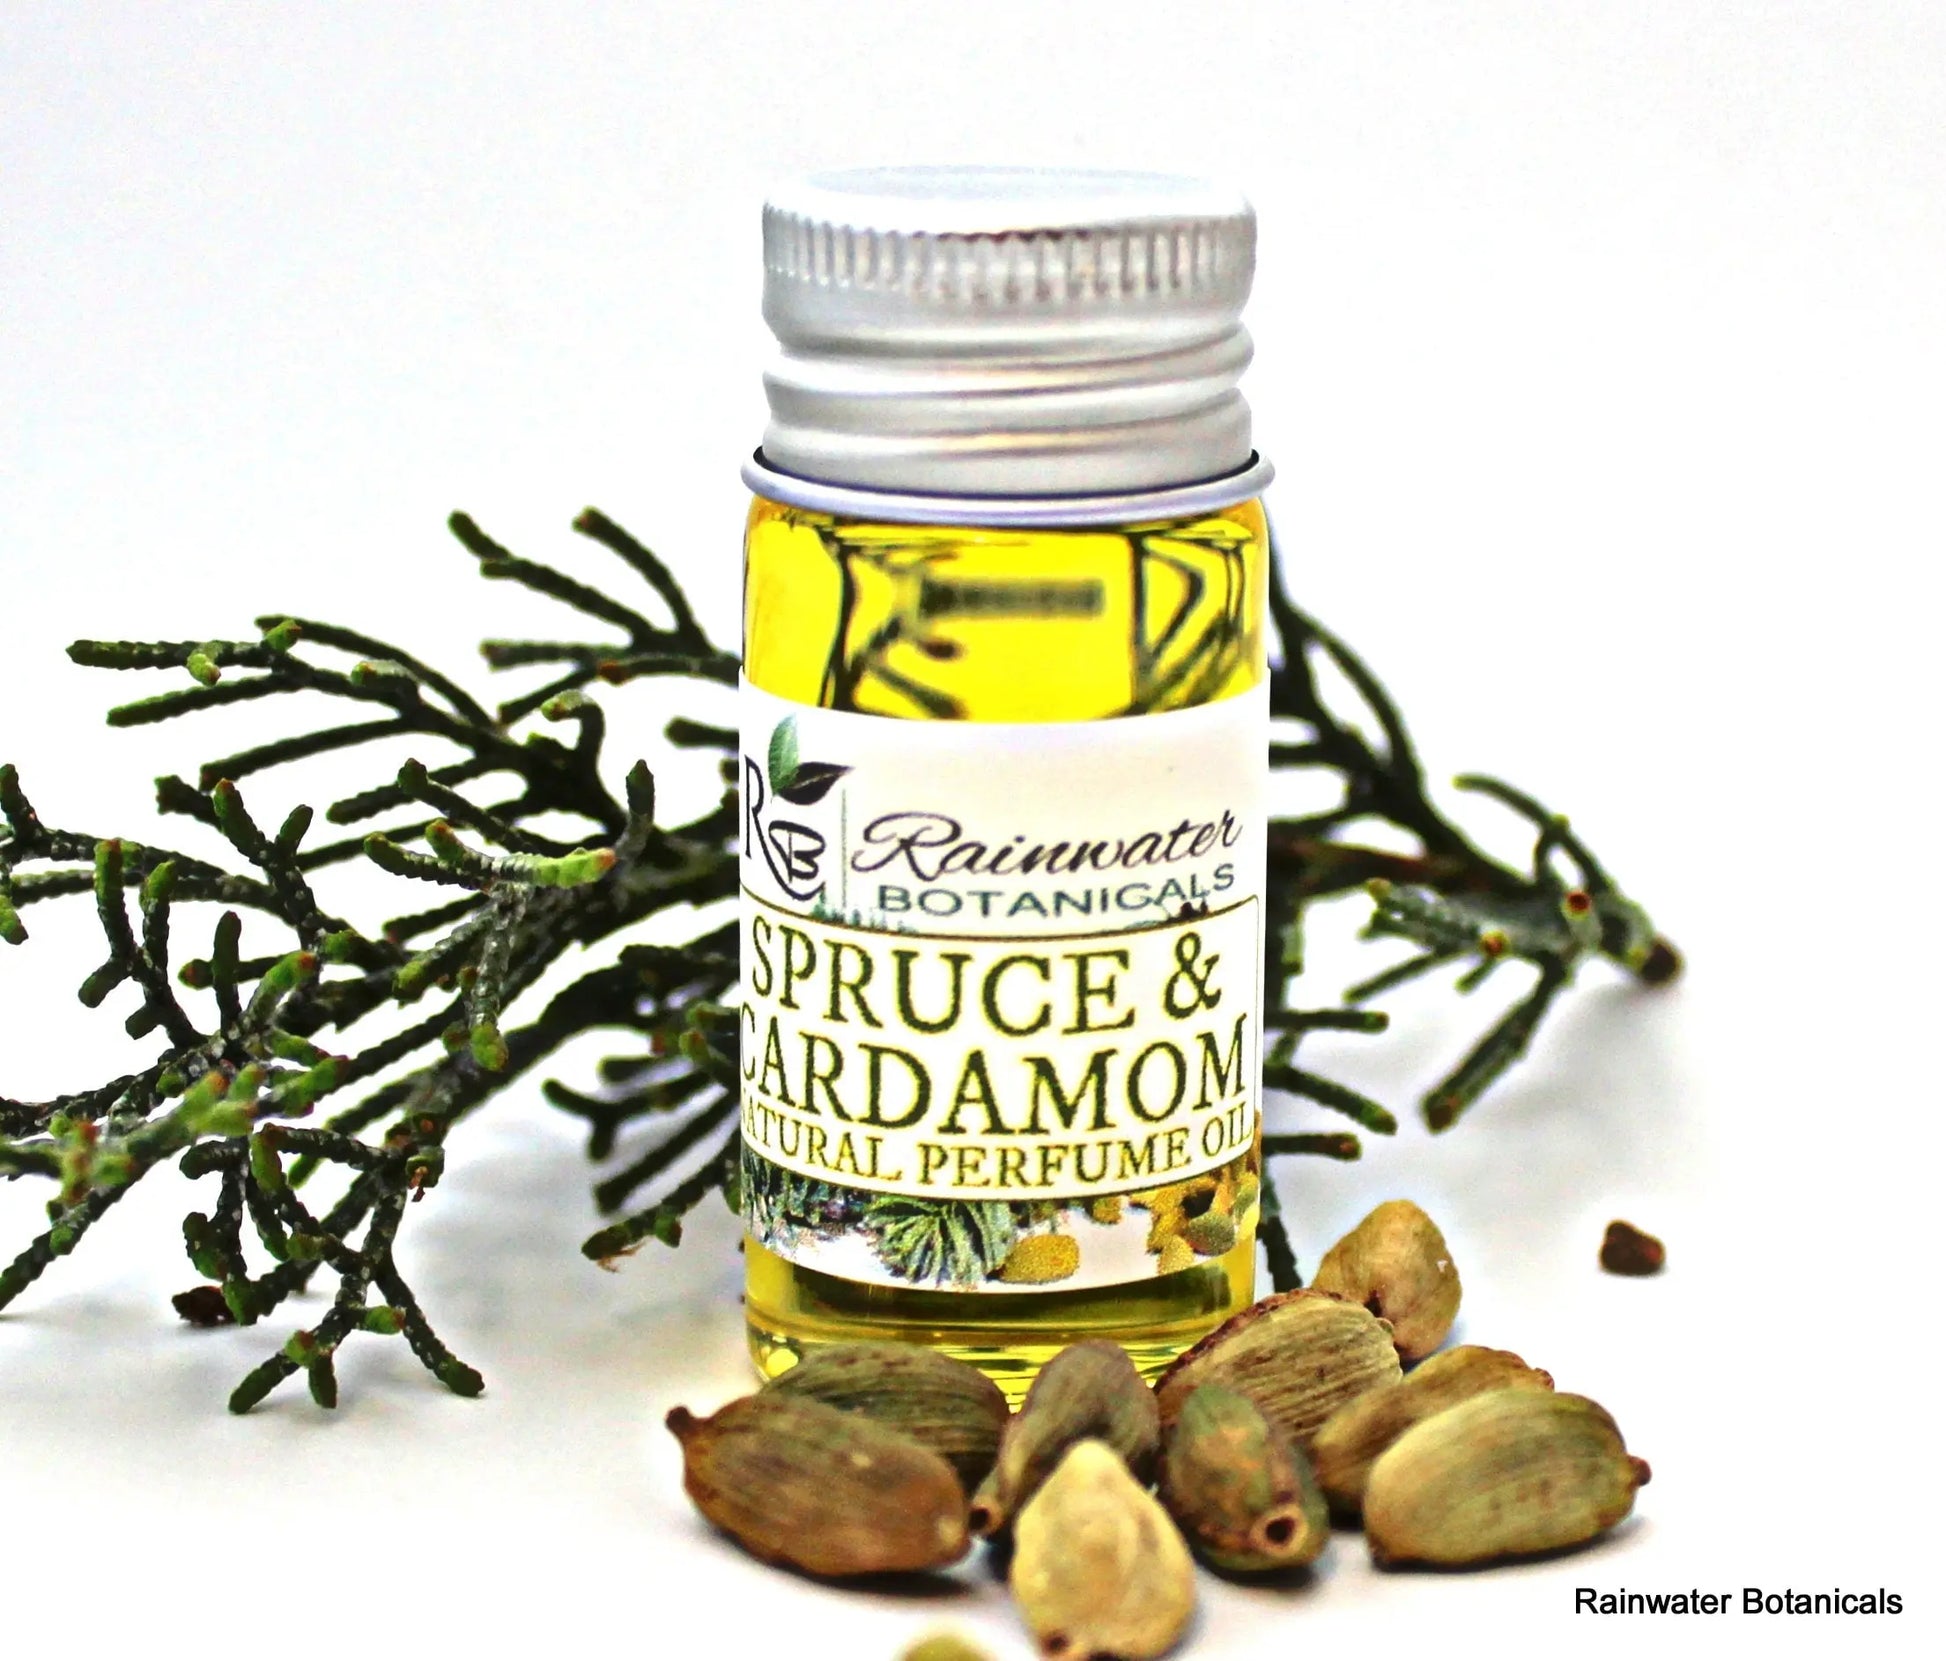 Spruce & Cardamom Natural Perfume Oil